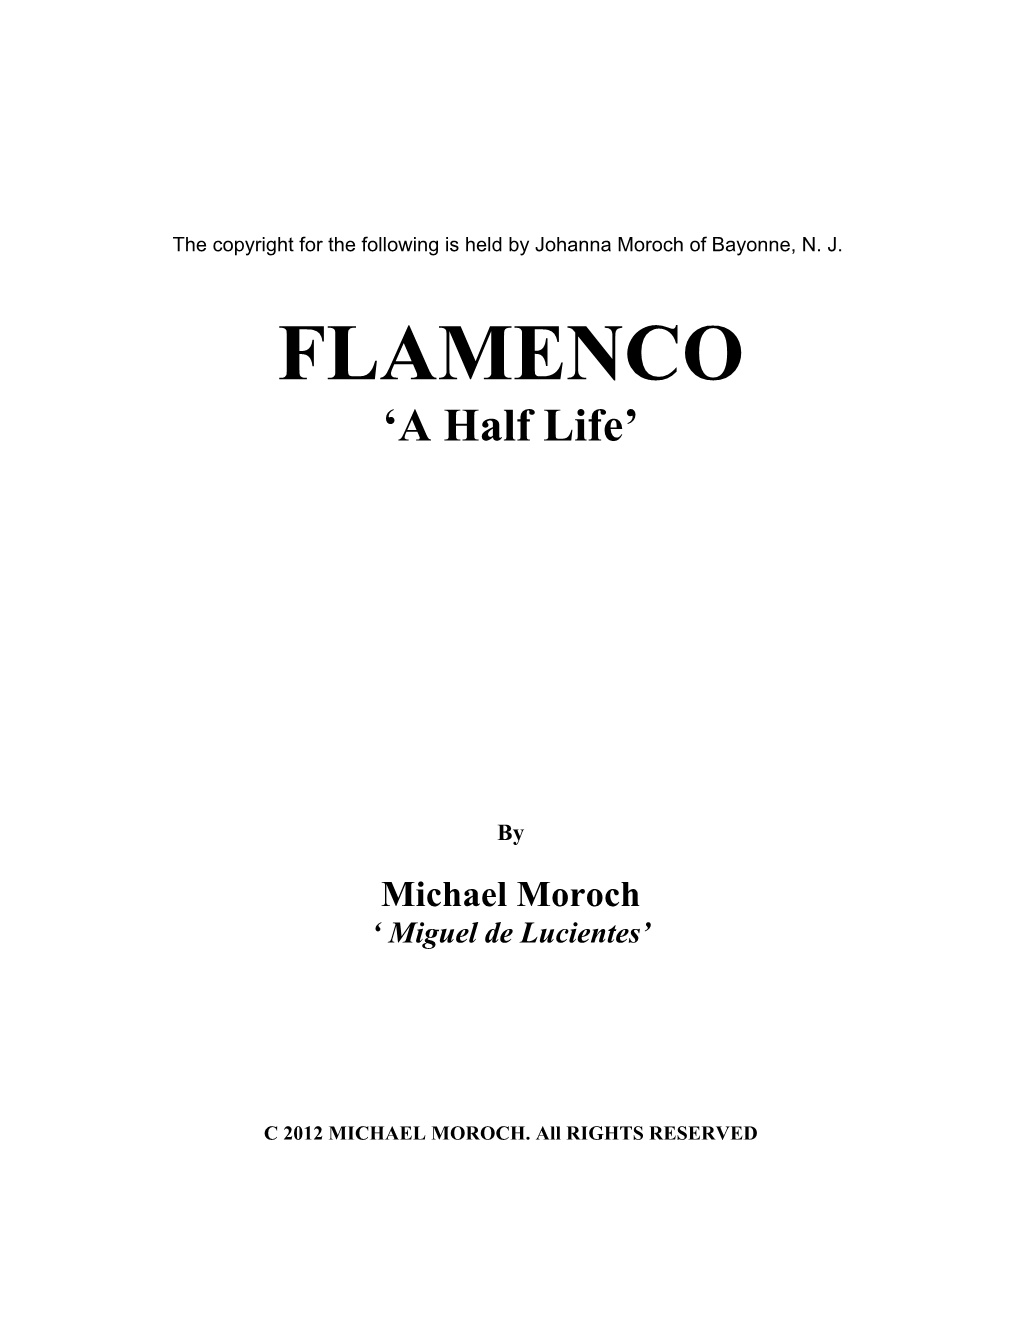 FLAMENCO ‘A Half Life’